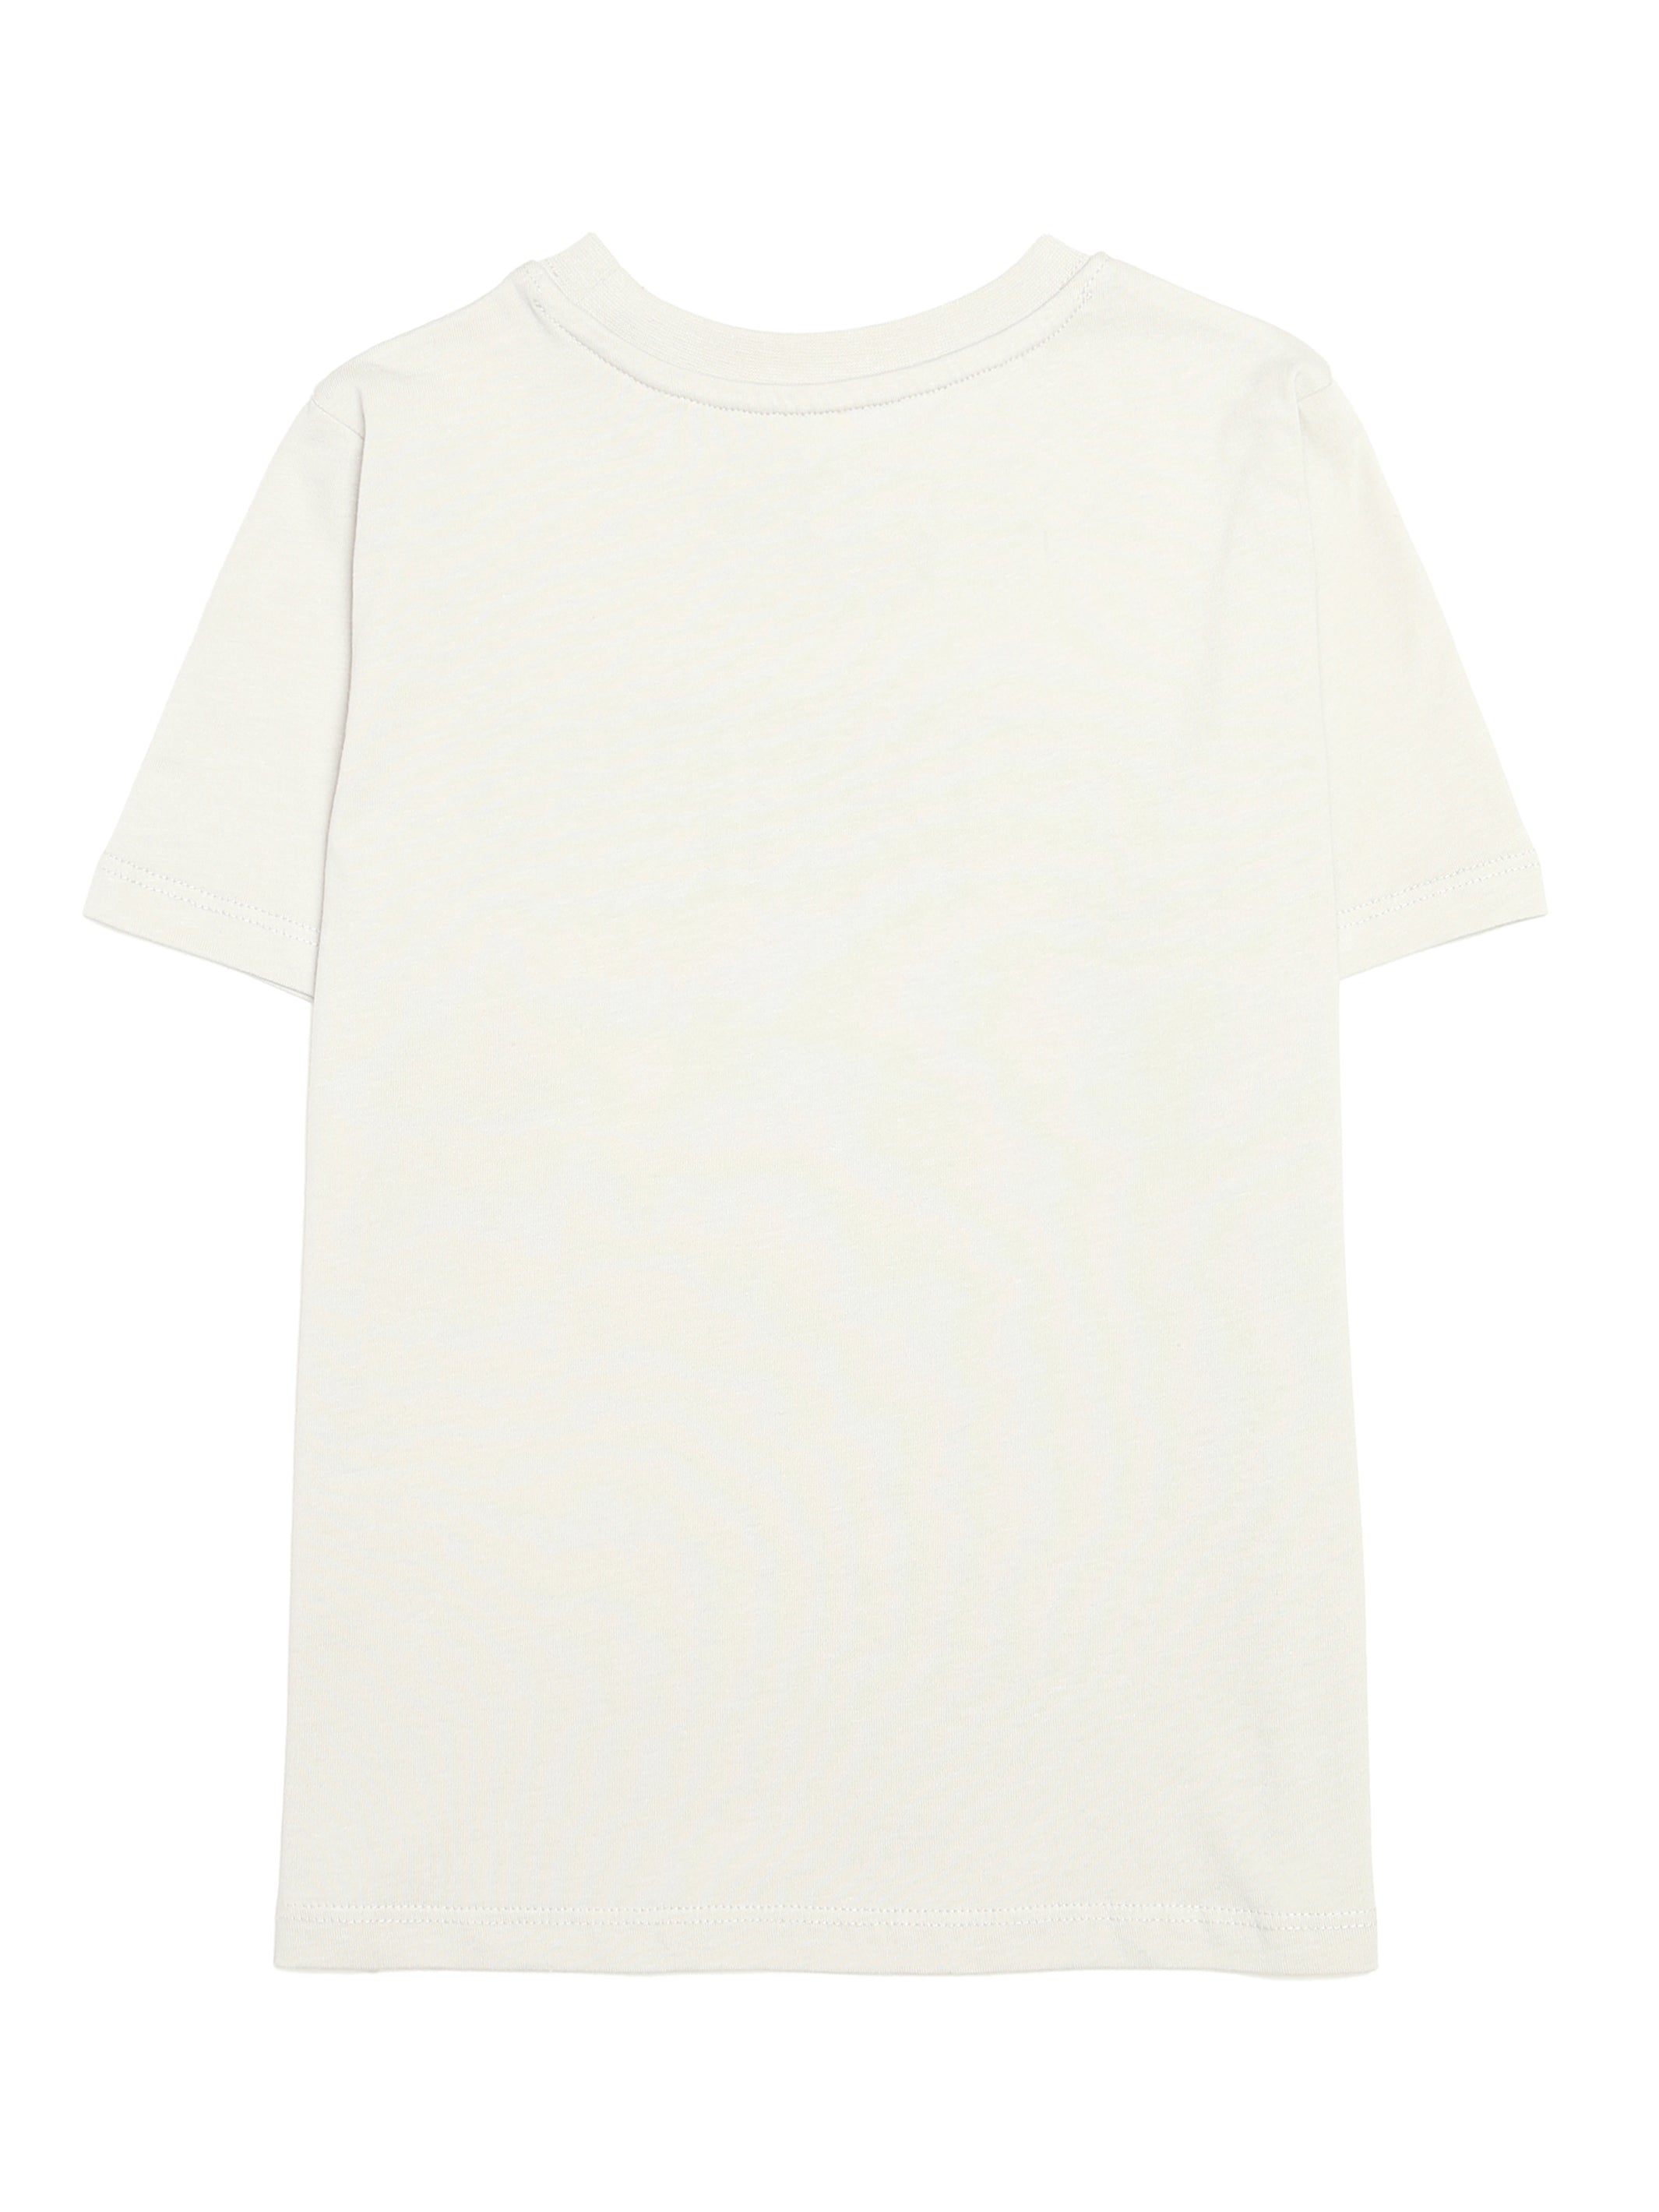 Girl's Reversed Brooklyn T-Shirt in Silver Birch - BROOKLYN INDUSTRIES